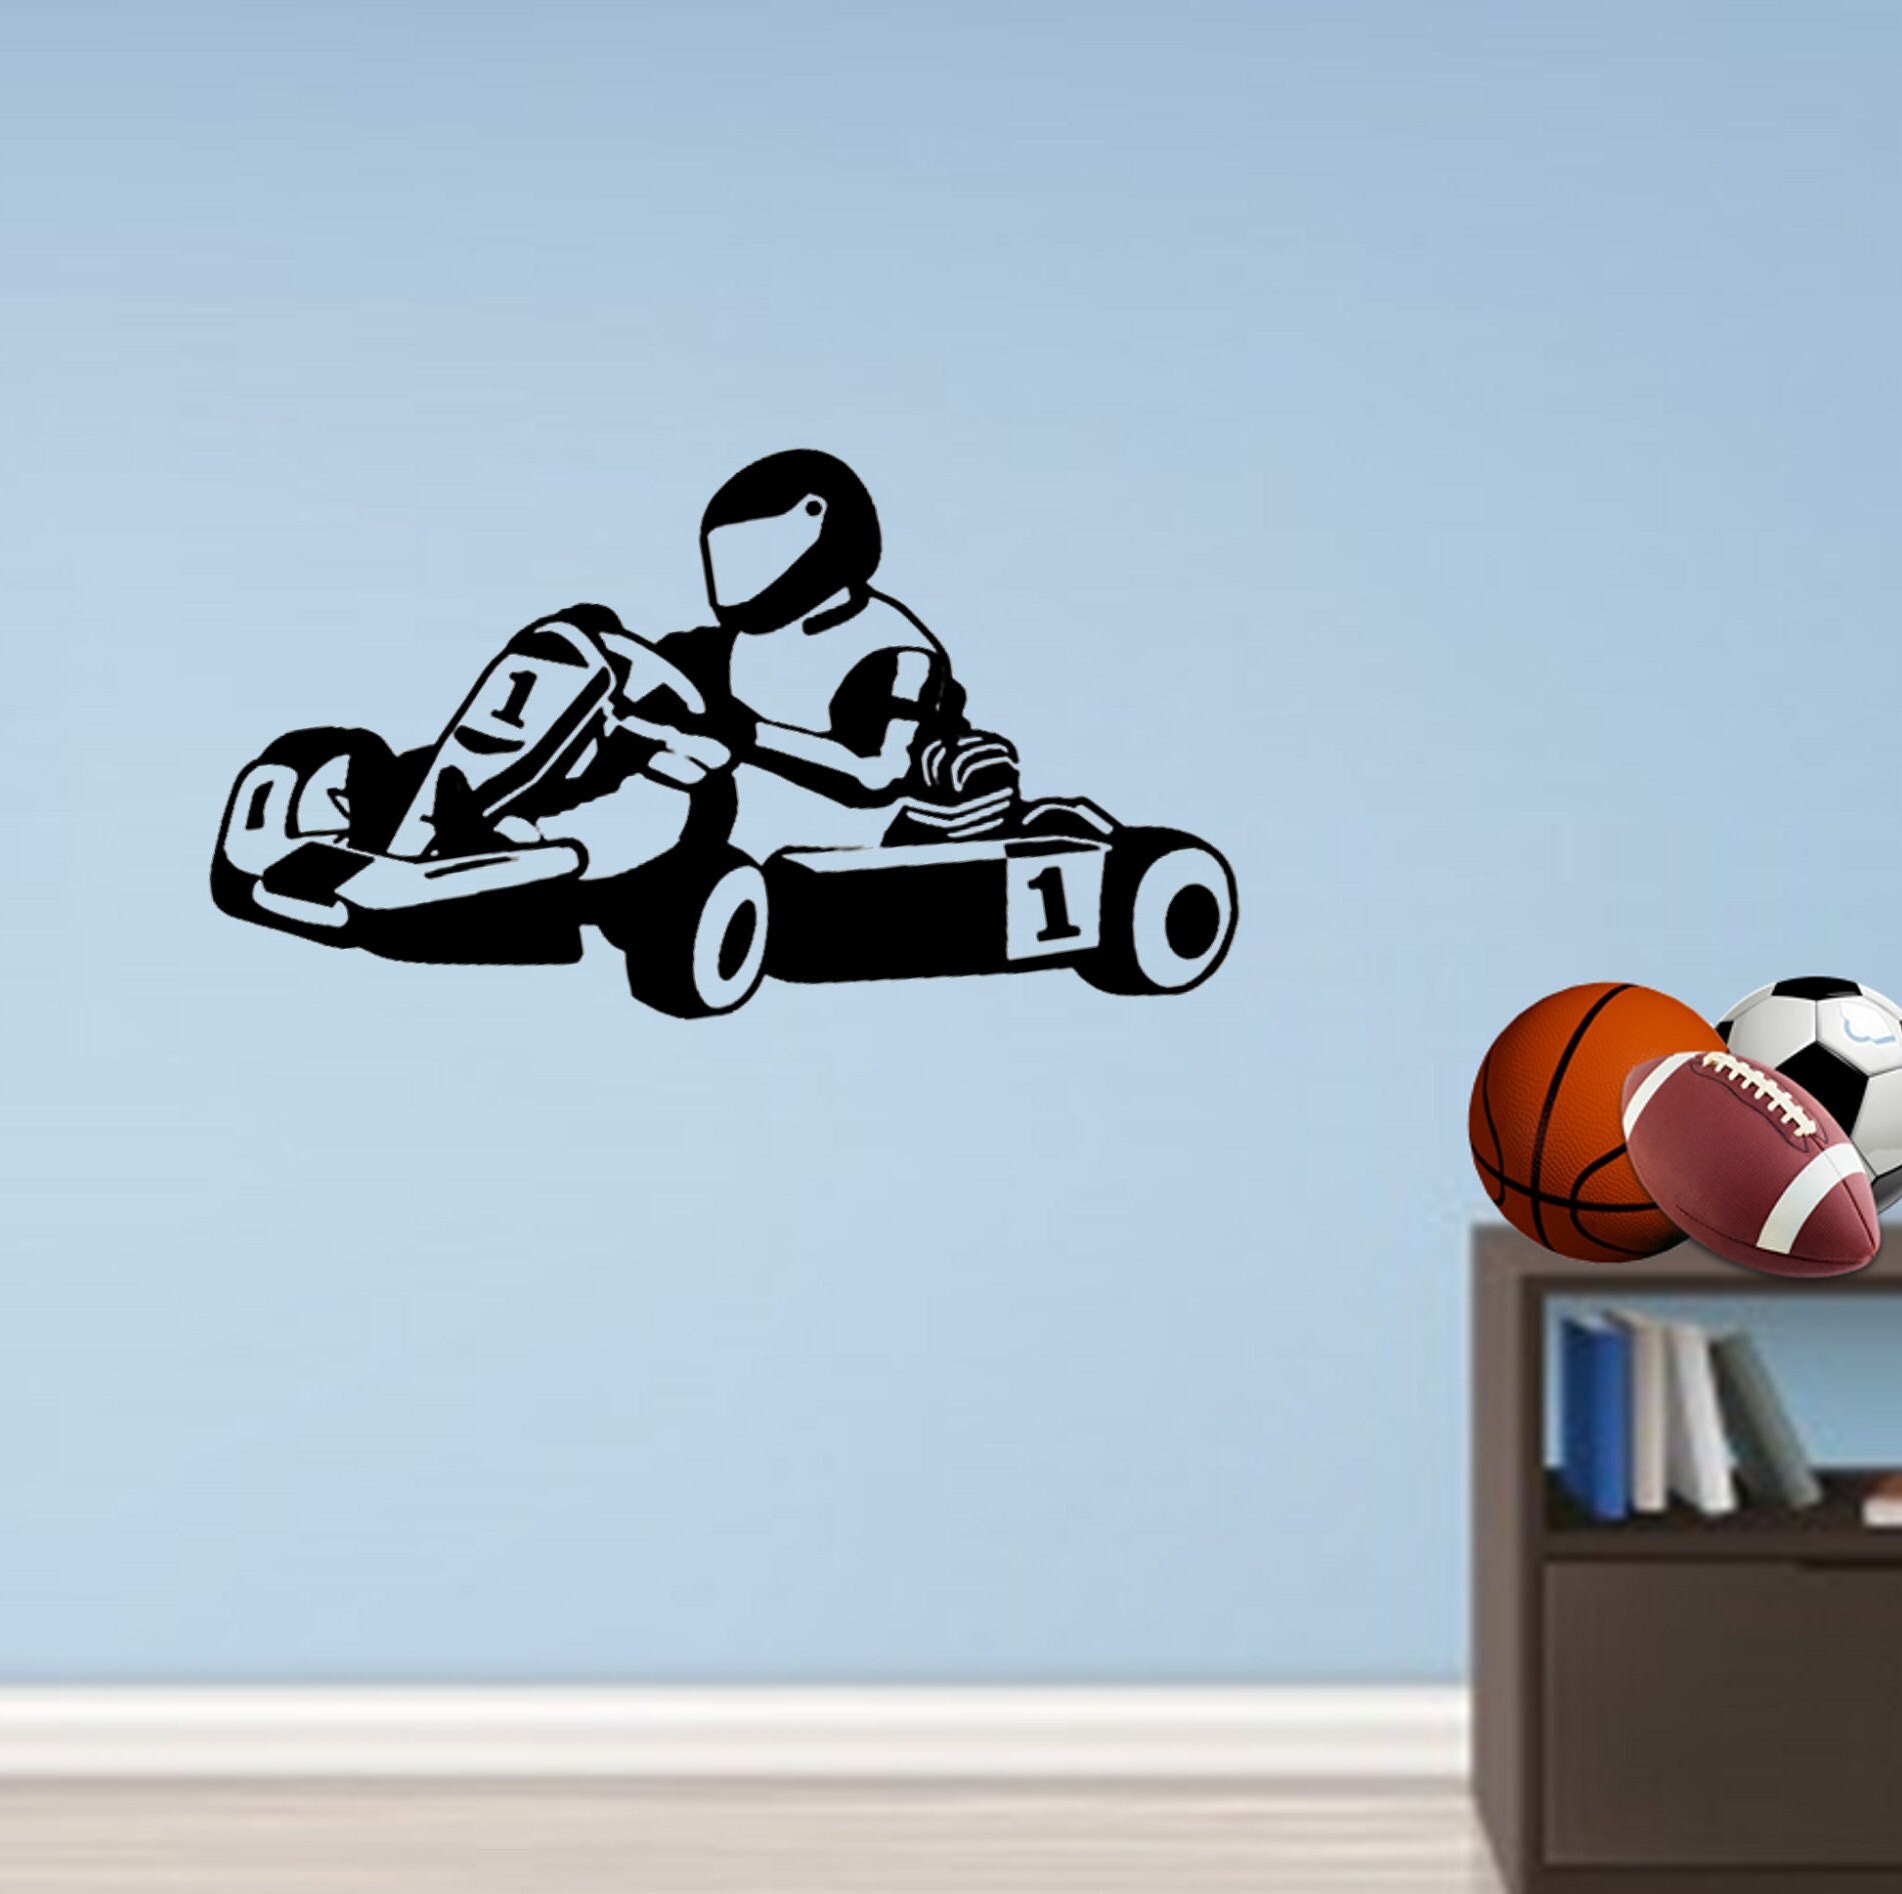 Go Kart Wall Stickers Transfer Graphic Decal Decor Art Stencils Boy Room Karting 